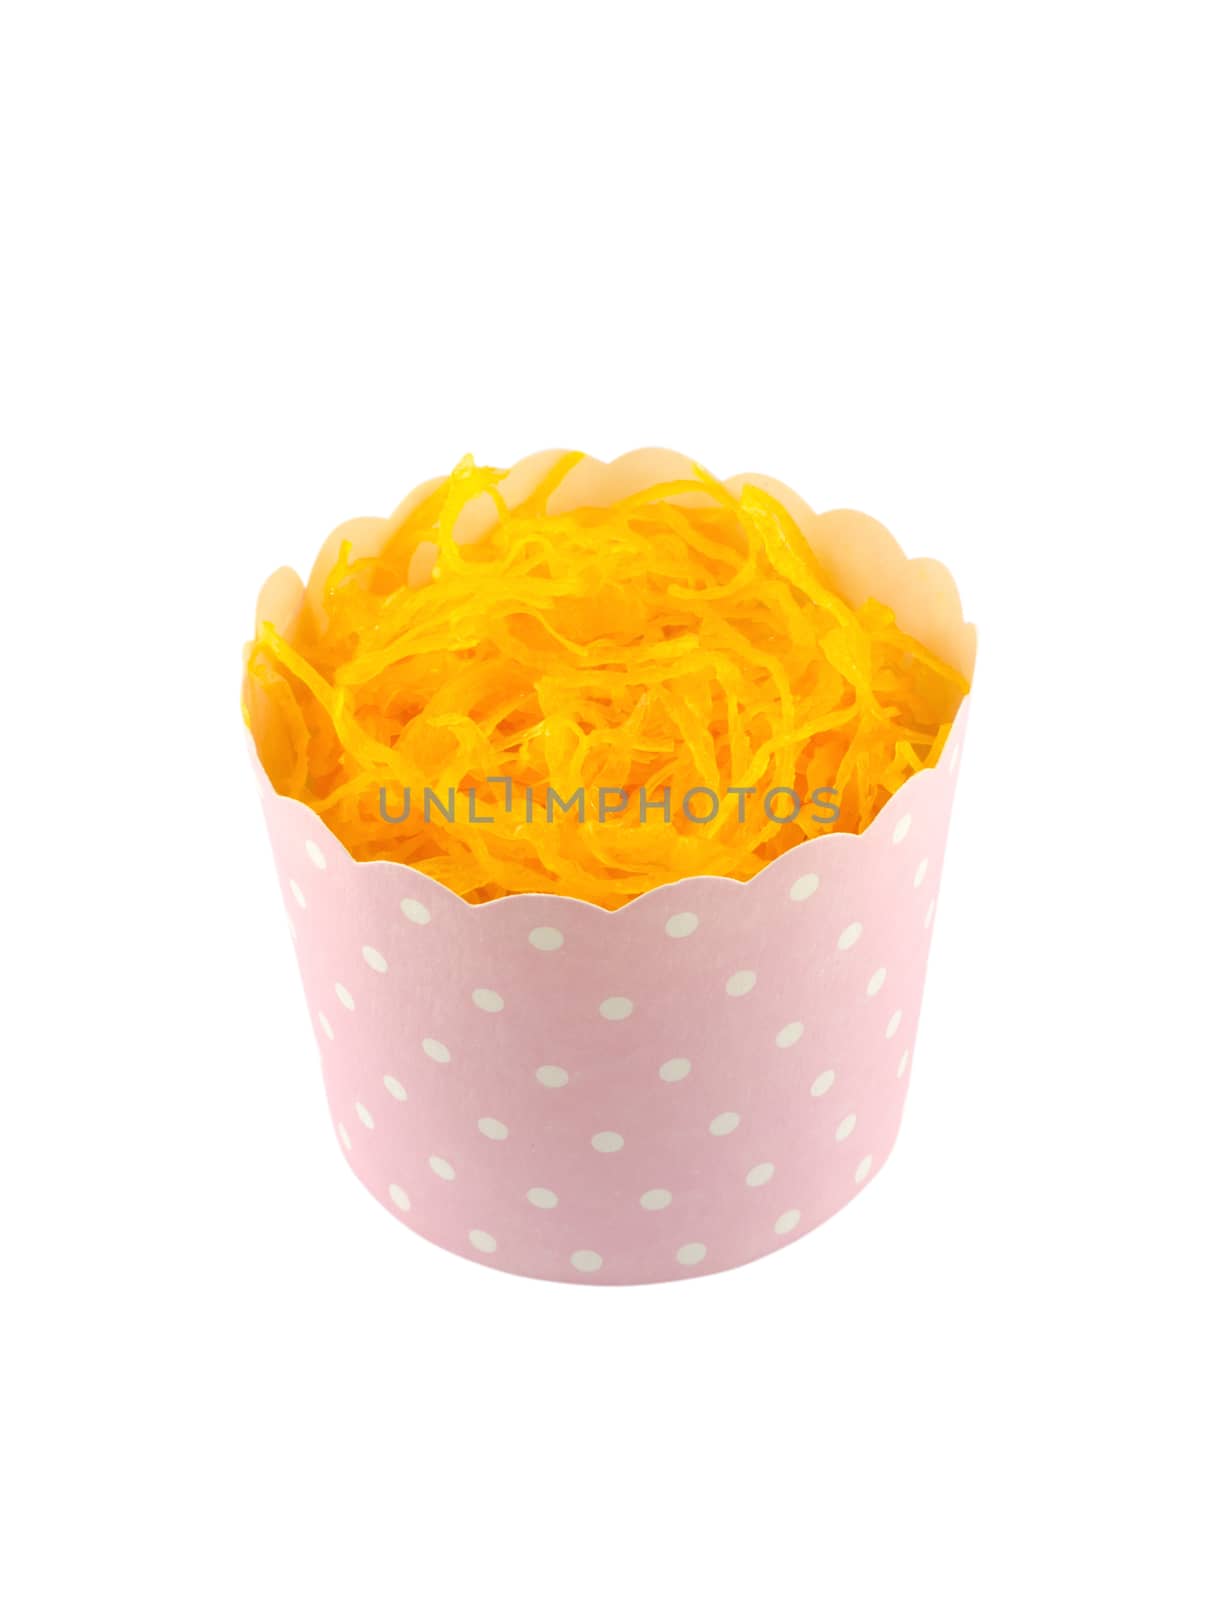 sweet yellow cupcake by nop16